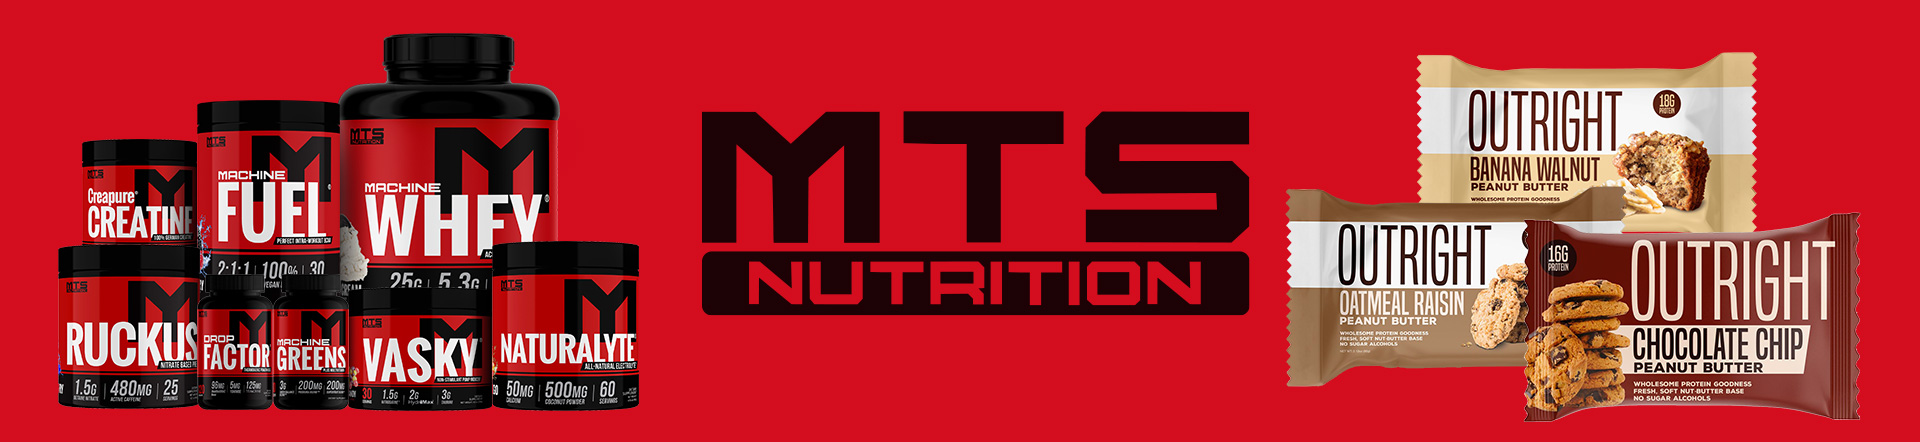 MTS Nutrition Outright Bar